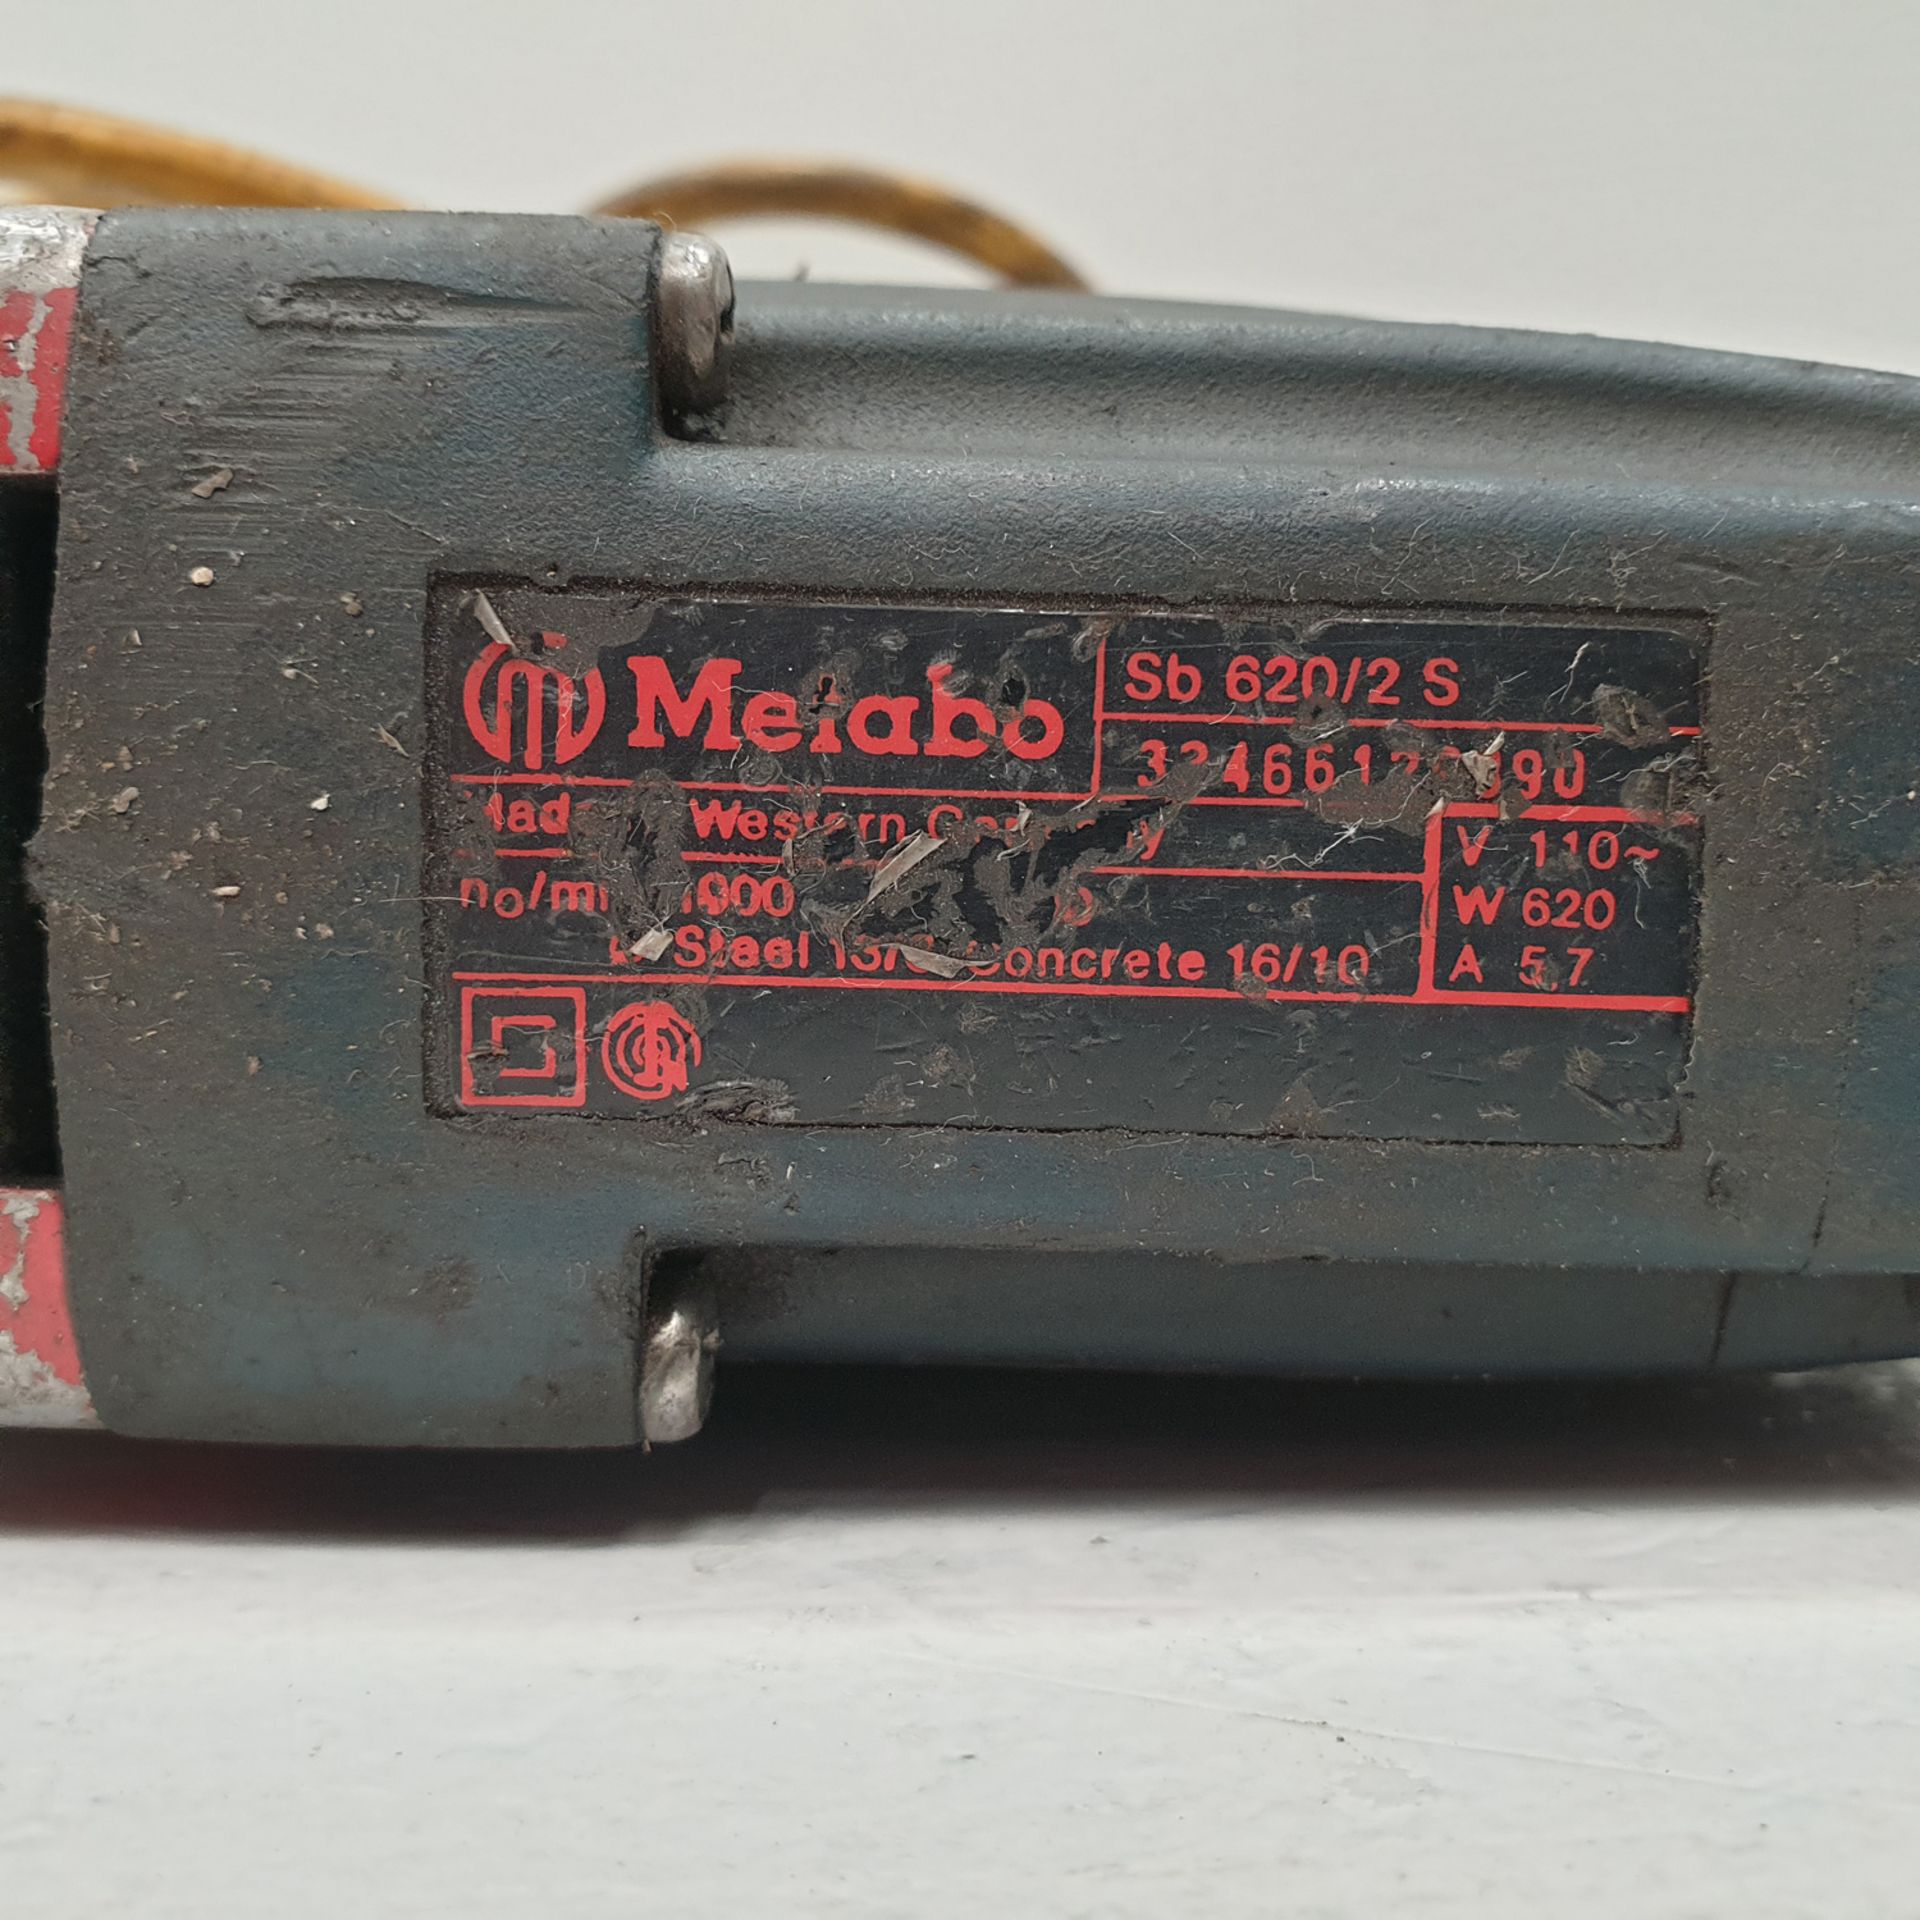 Metabo Model sb 620/2 S. 110V Drill. - Image 3 of 3